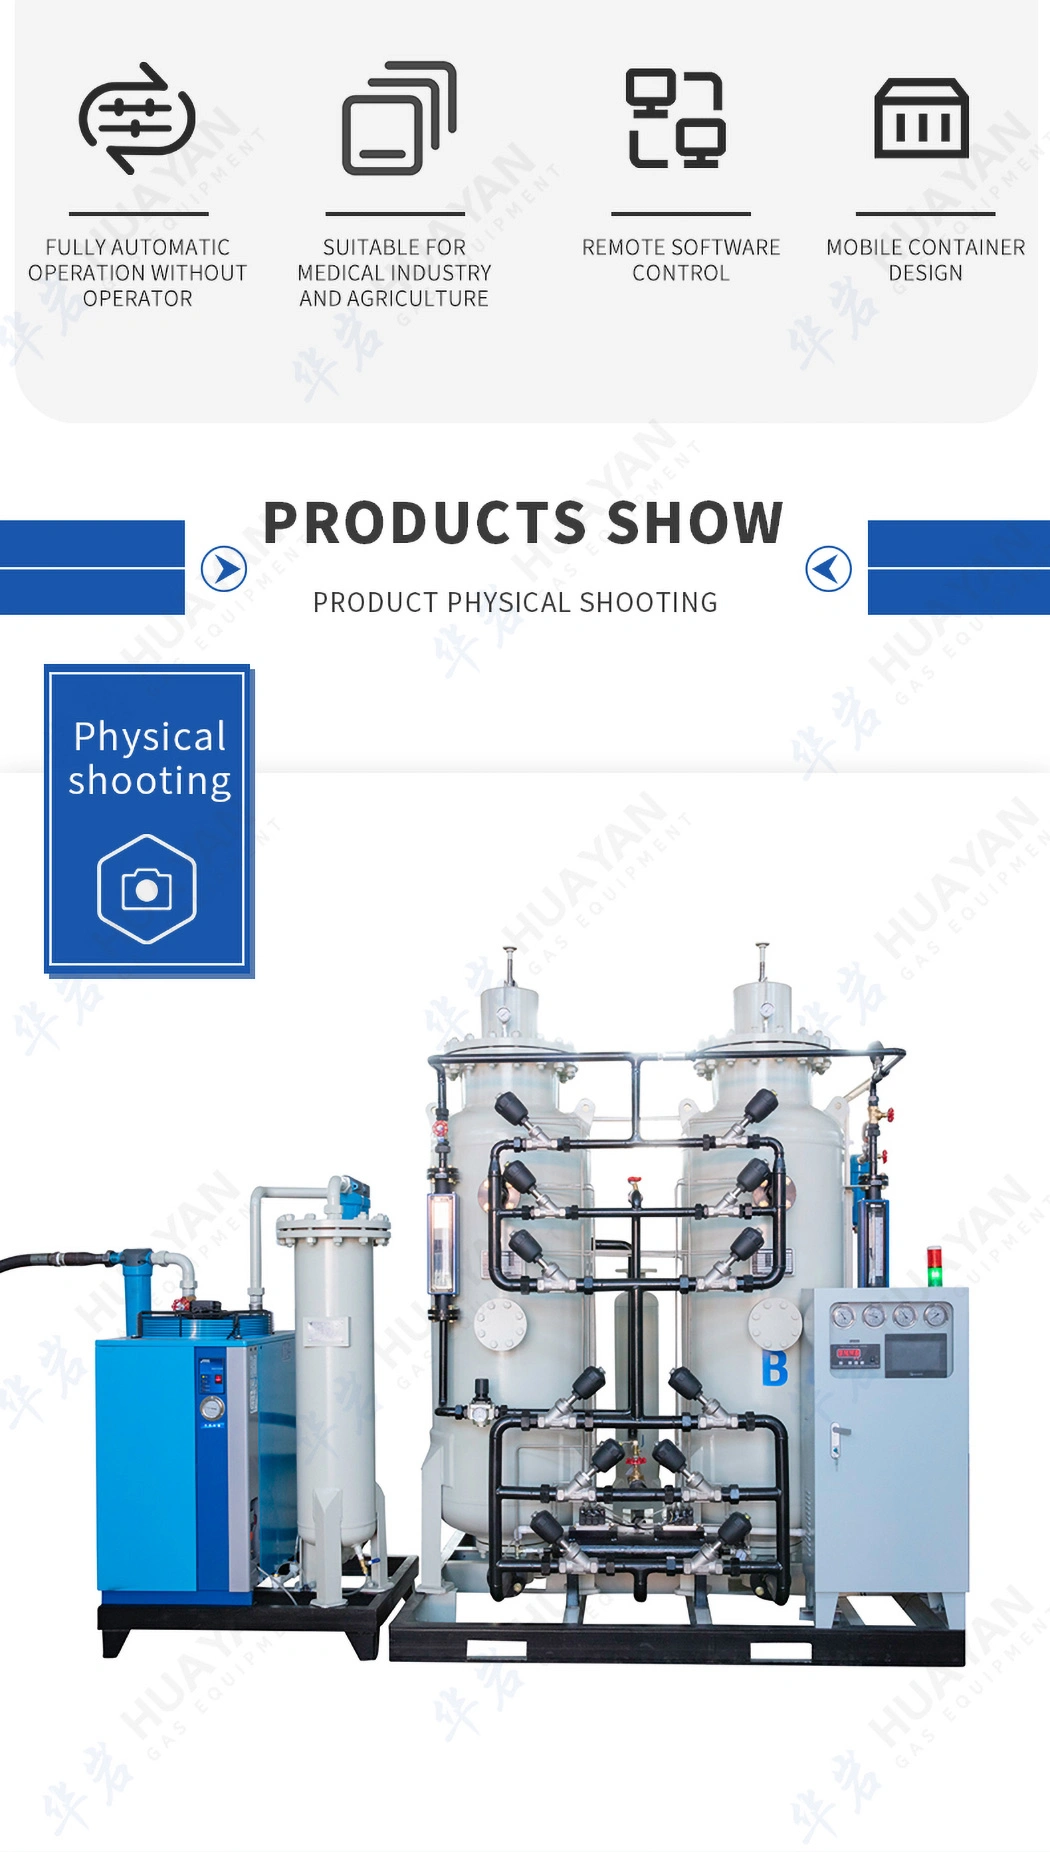 Hyo-10 Professional Manufacturer Psa Oxygen Generator System Oxygen Manufacturing Machine Monitoring System